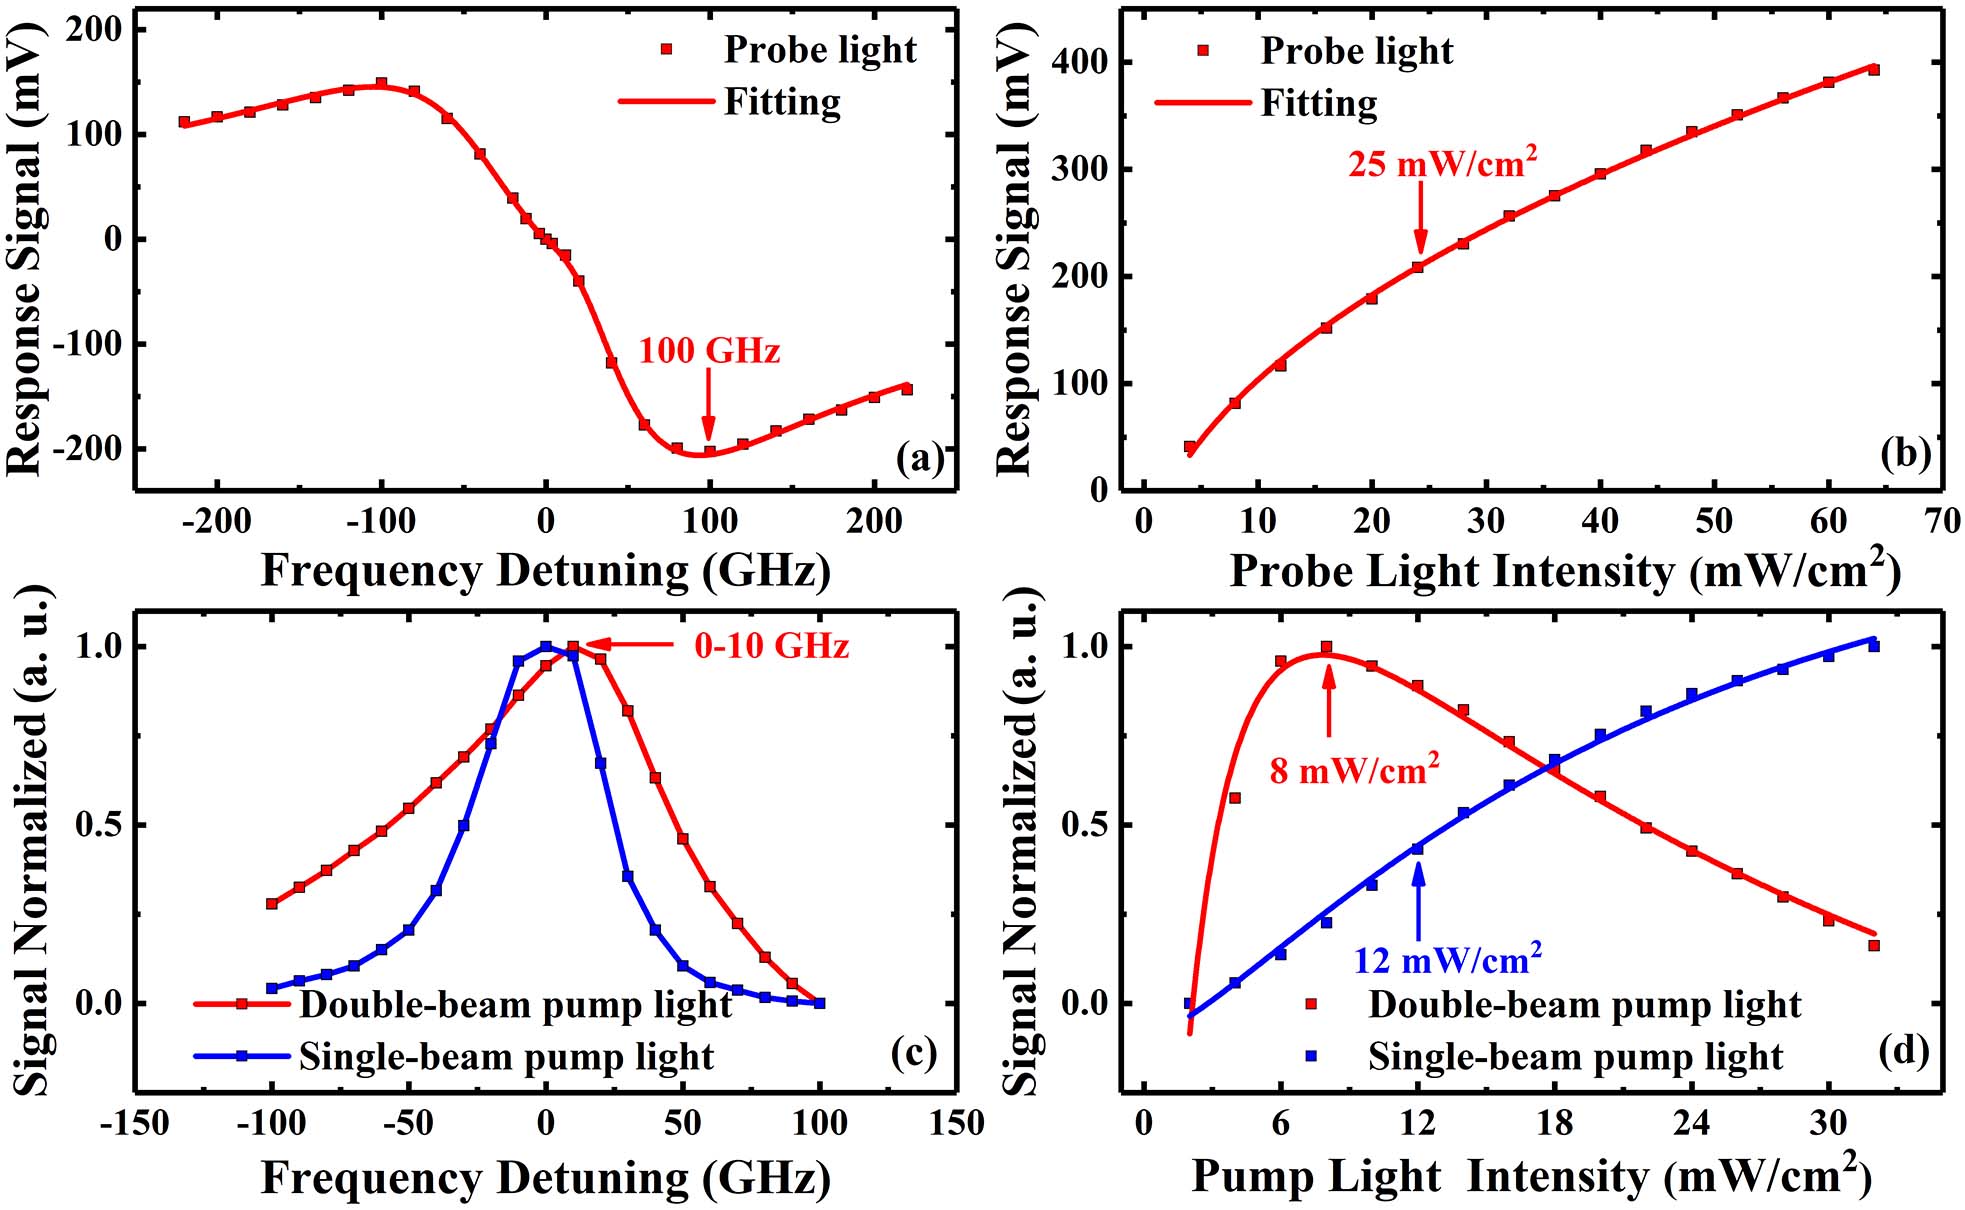 Response signal versus (a) frequency detuning of probe light, (b) light intensity of probe light, (c) frequency detuning of pump light, and (d) light intensity of pump light.